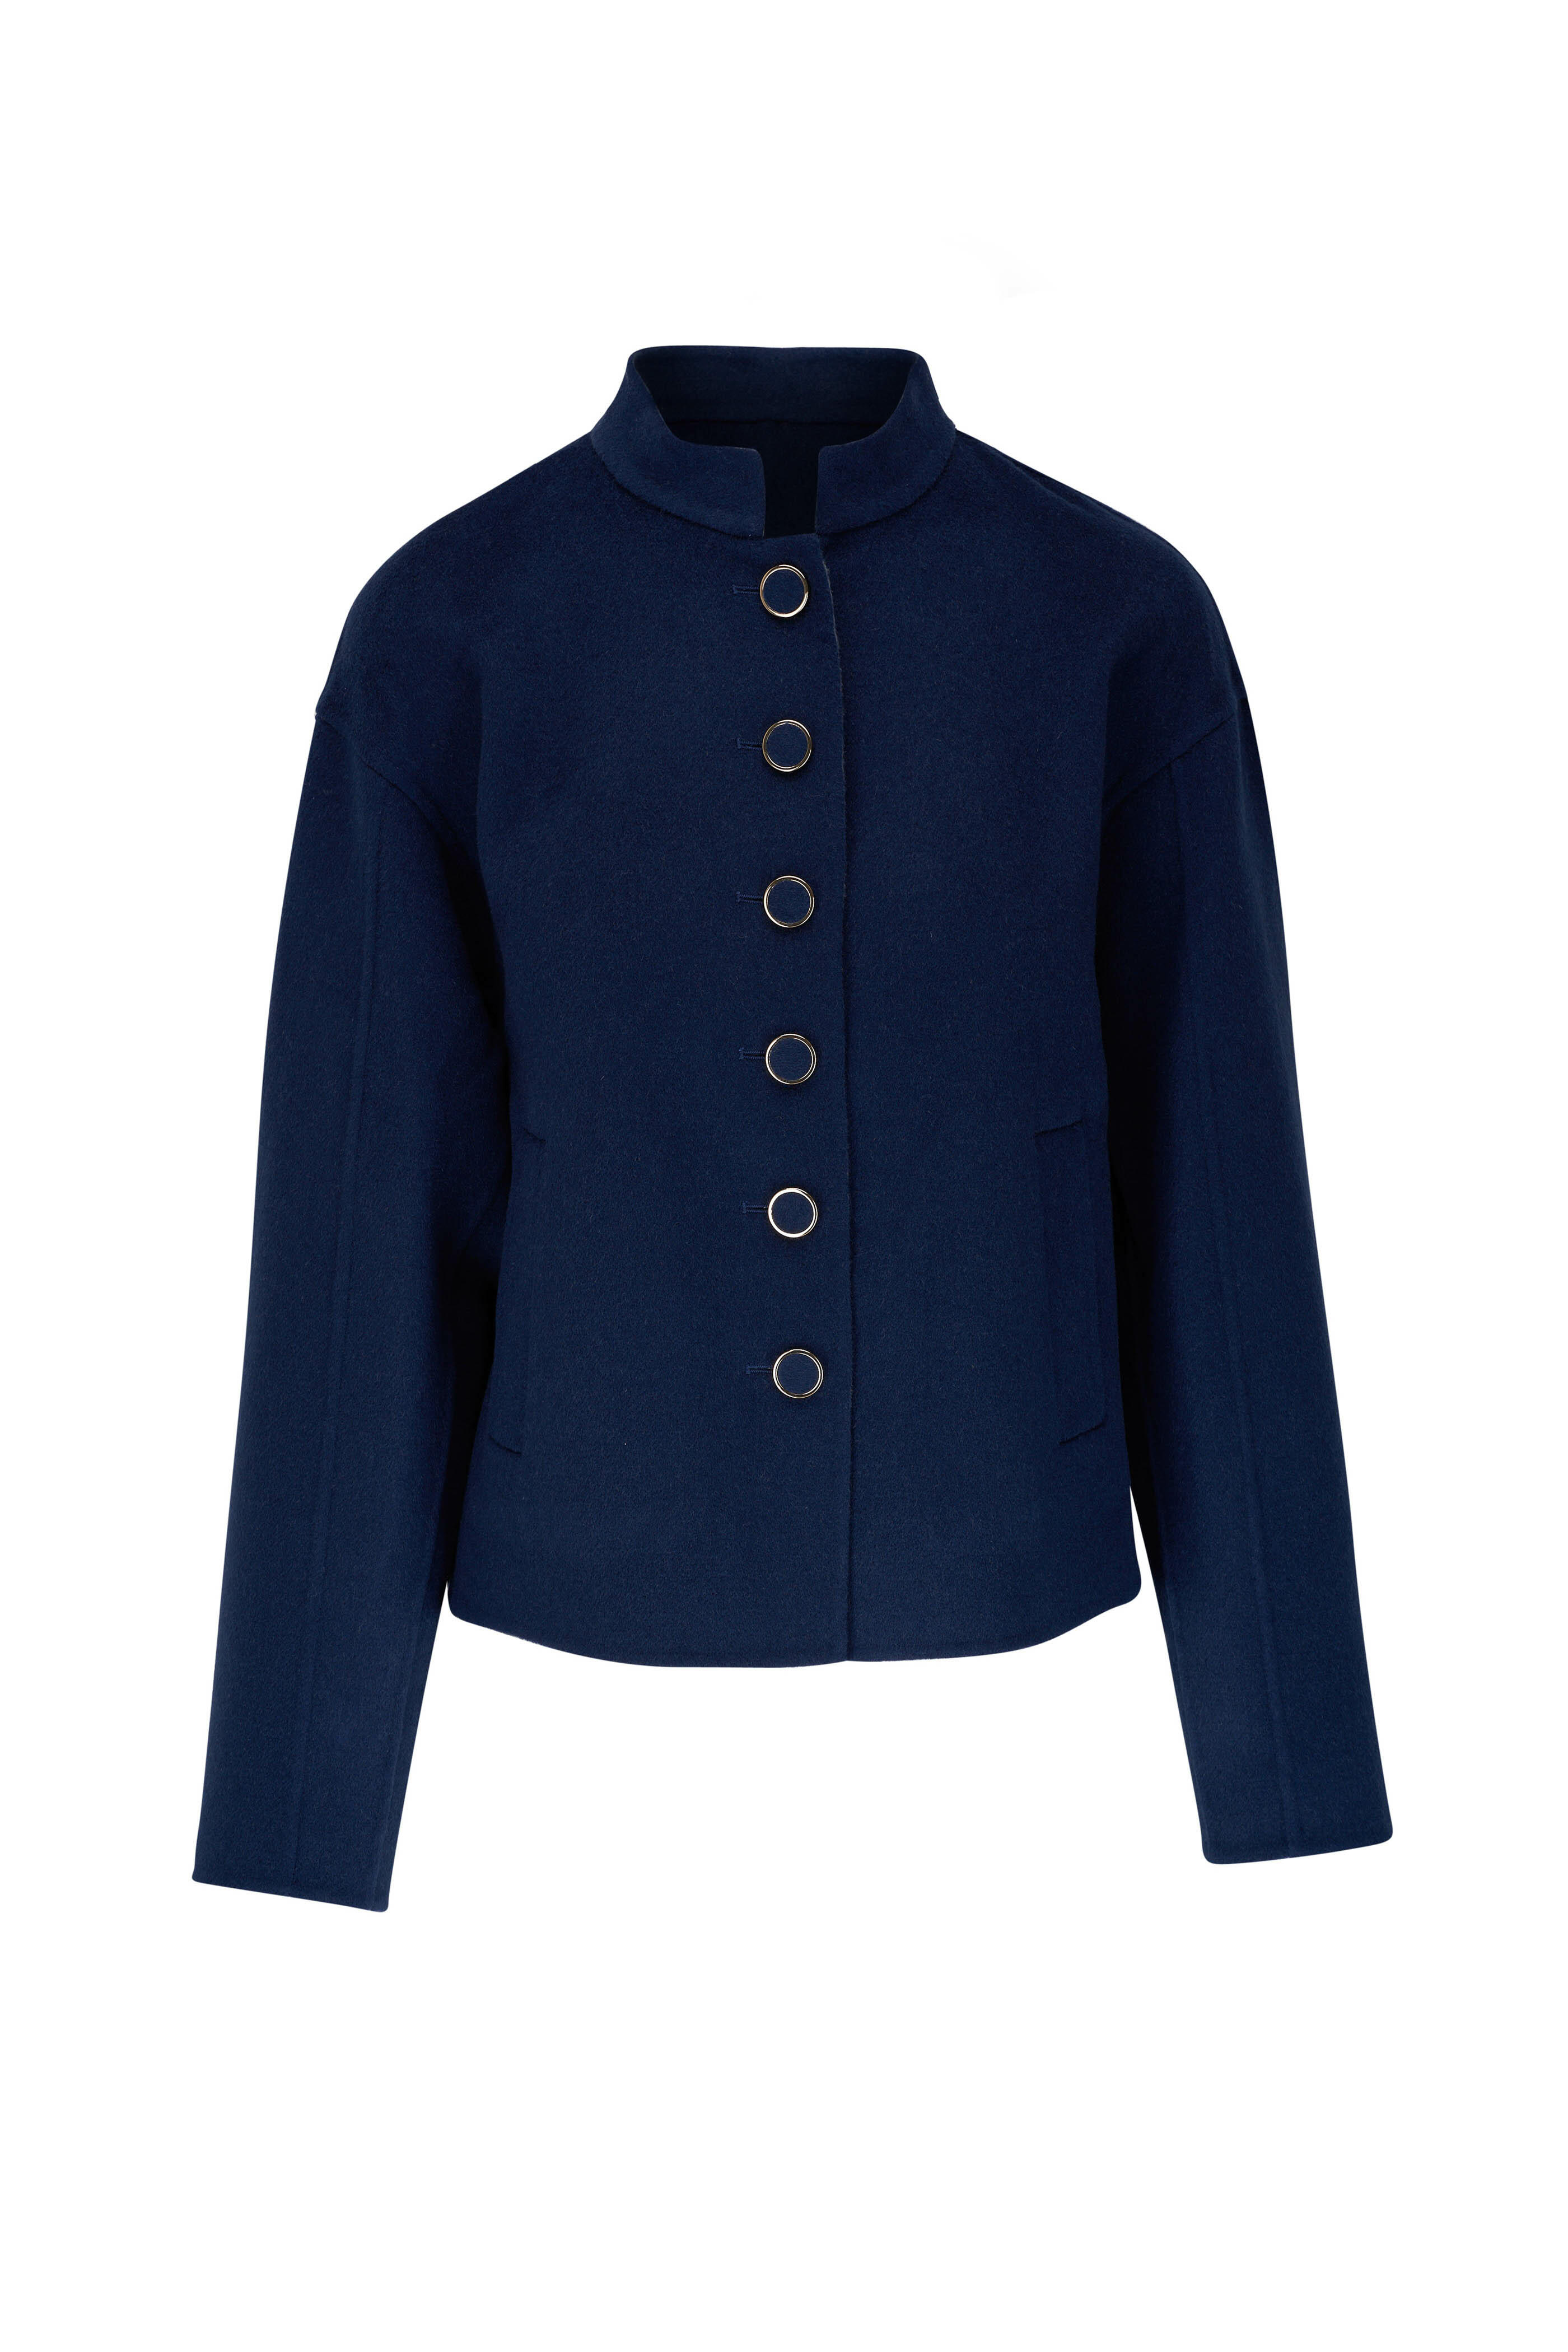 Lafayette 148 New York - Midnight Blue & Cloud Wool & Cashmere Jacket